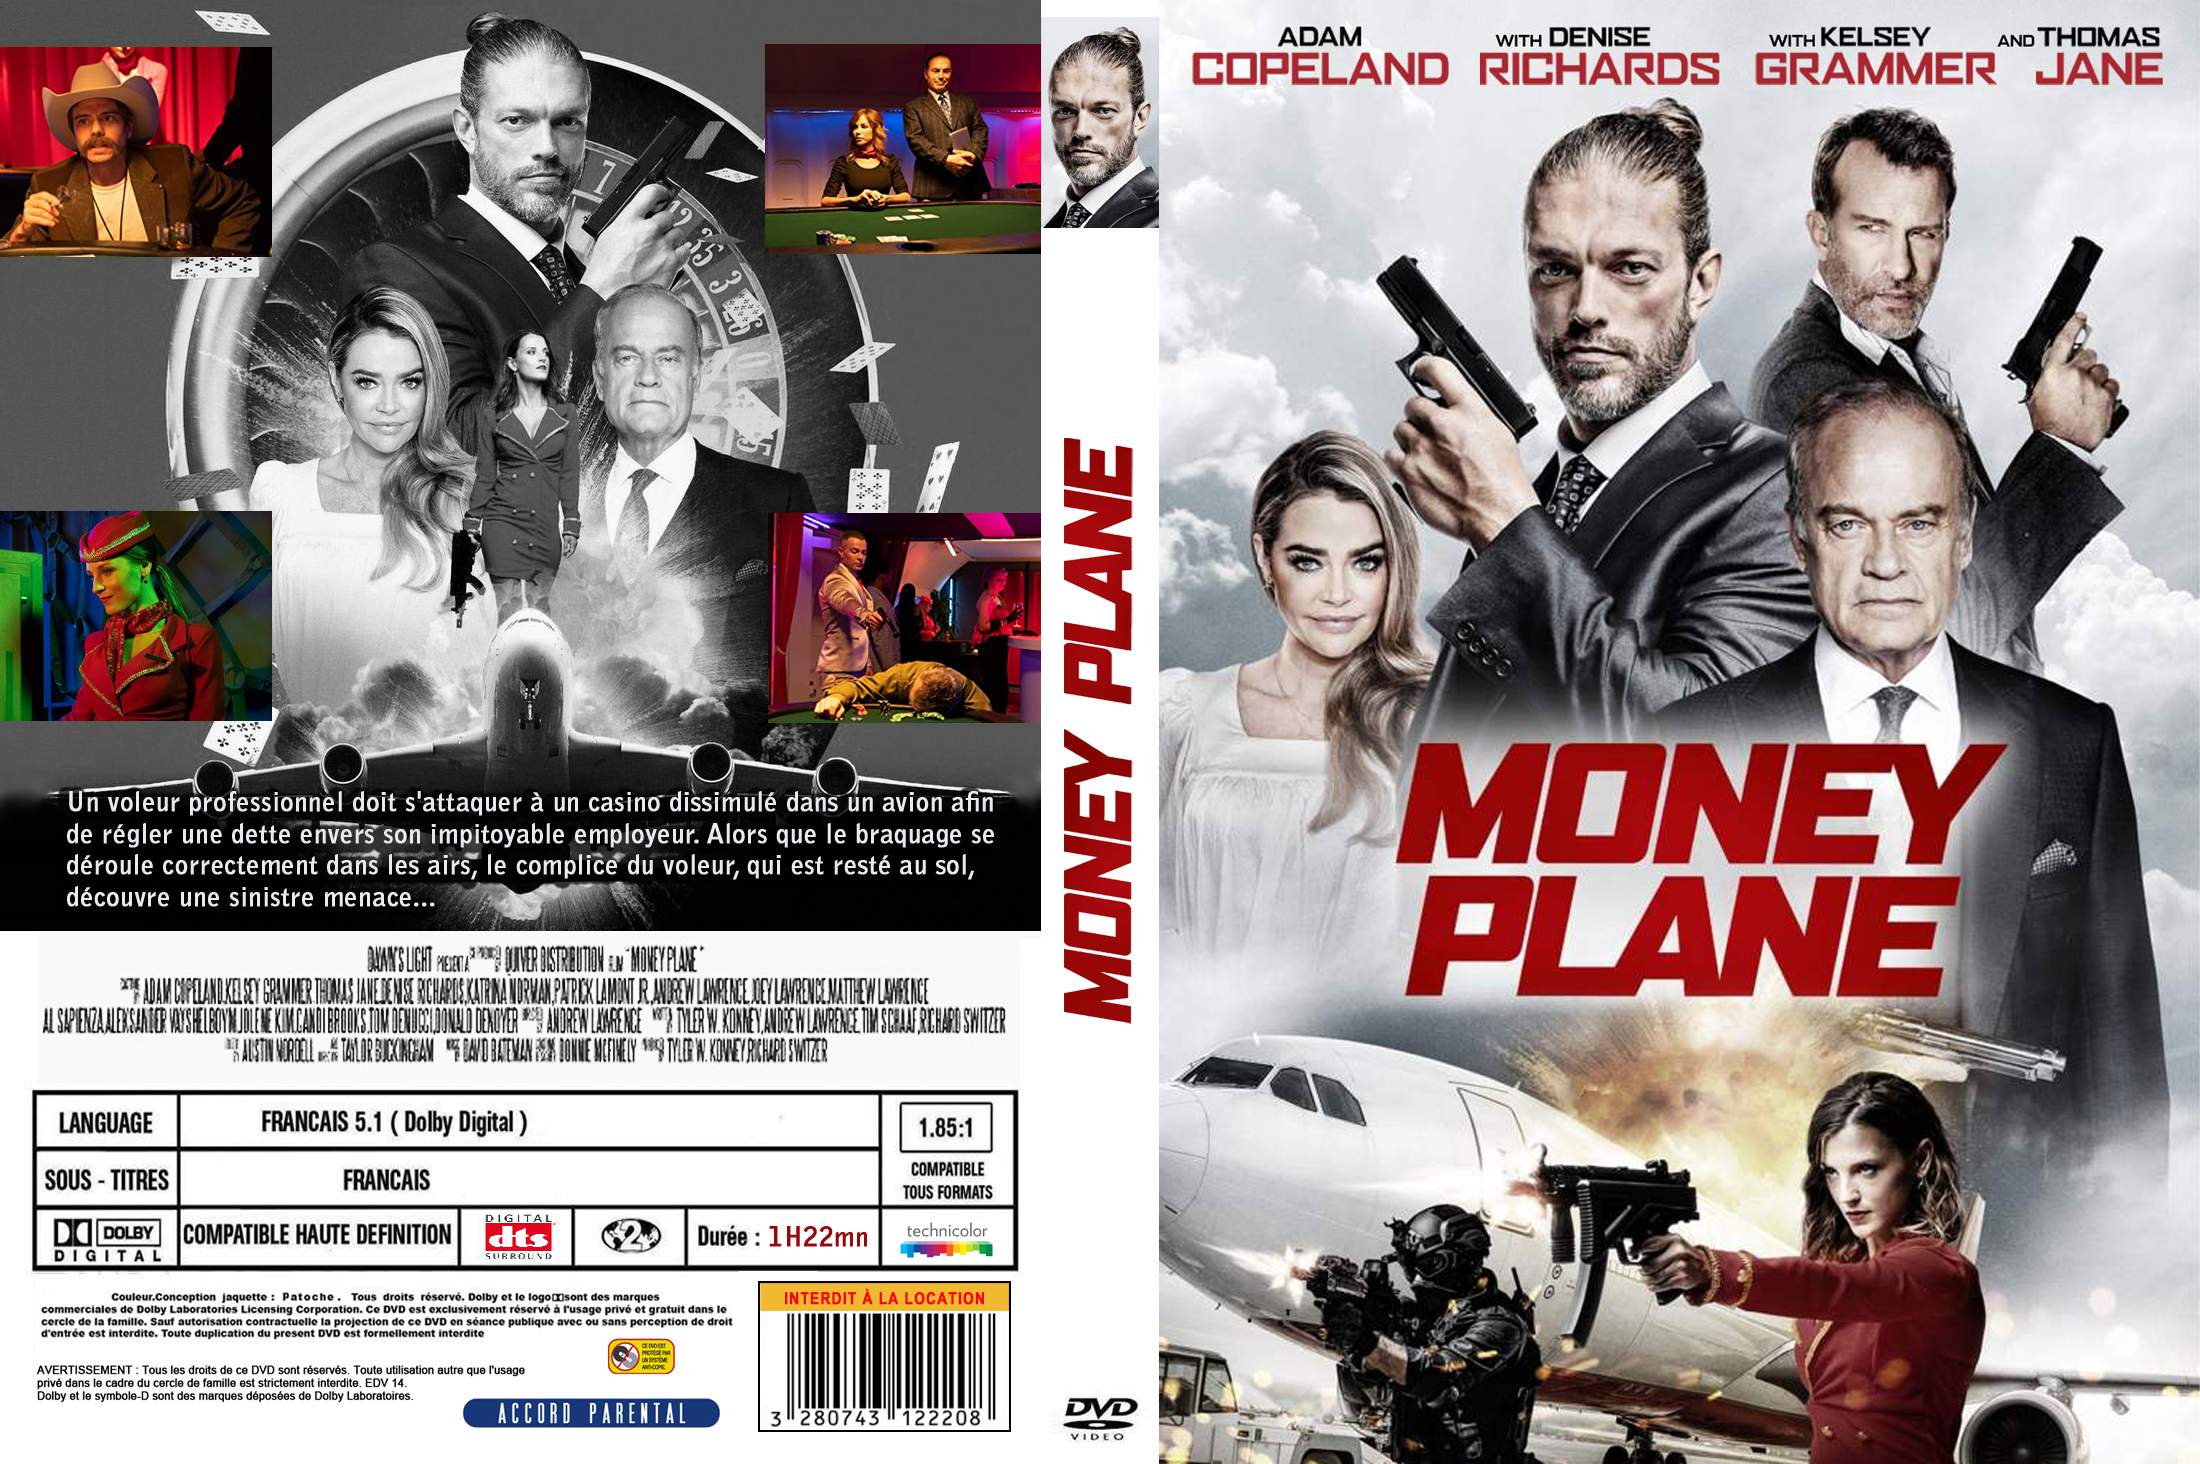 Jaquette DVD Money plane custom